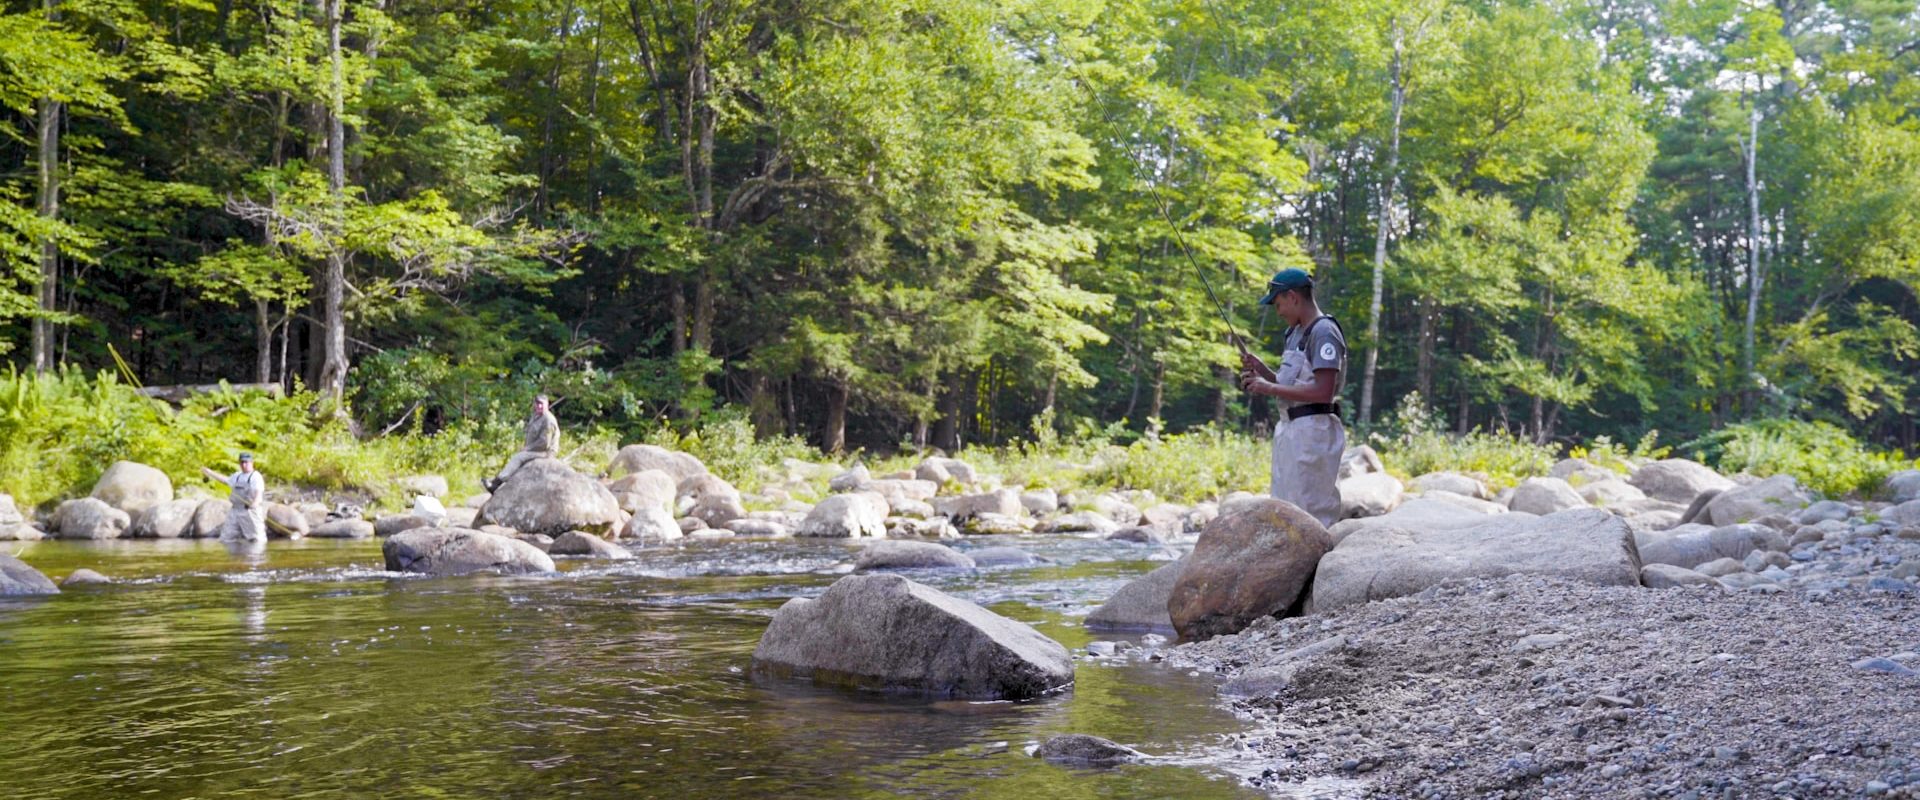 man fishing in a stream